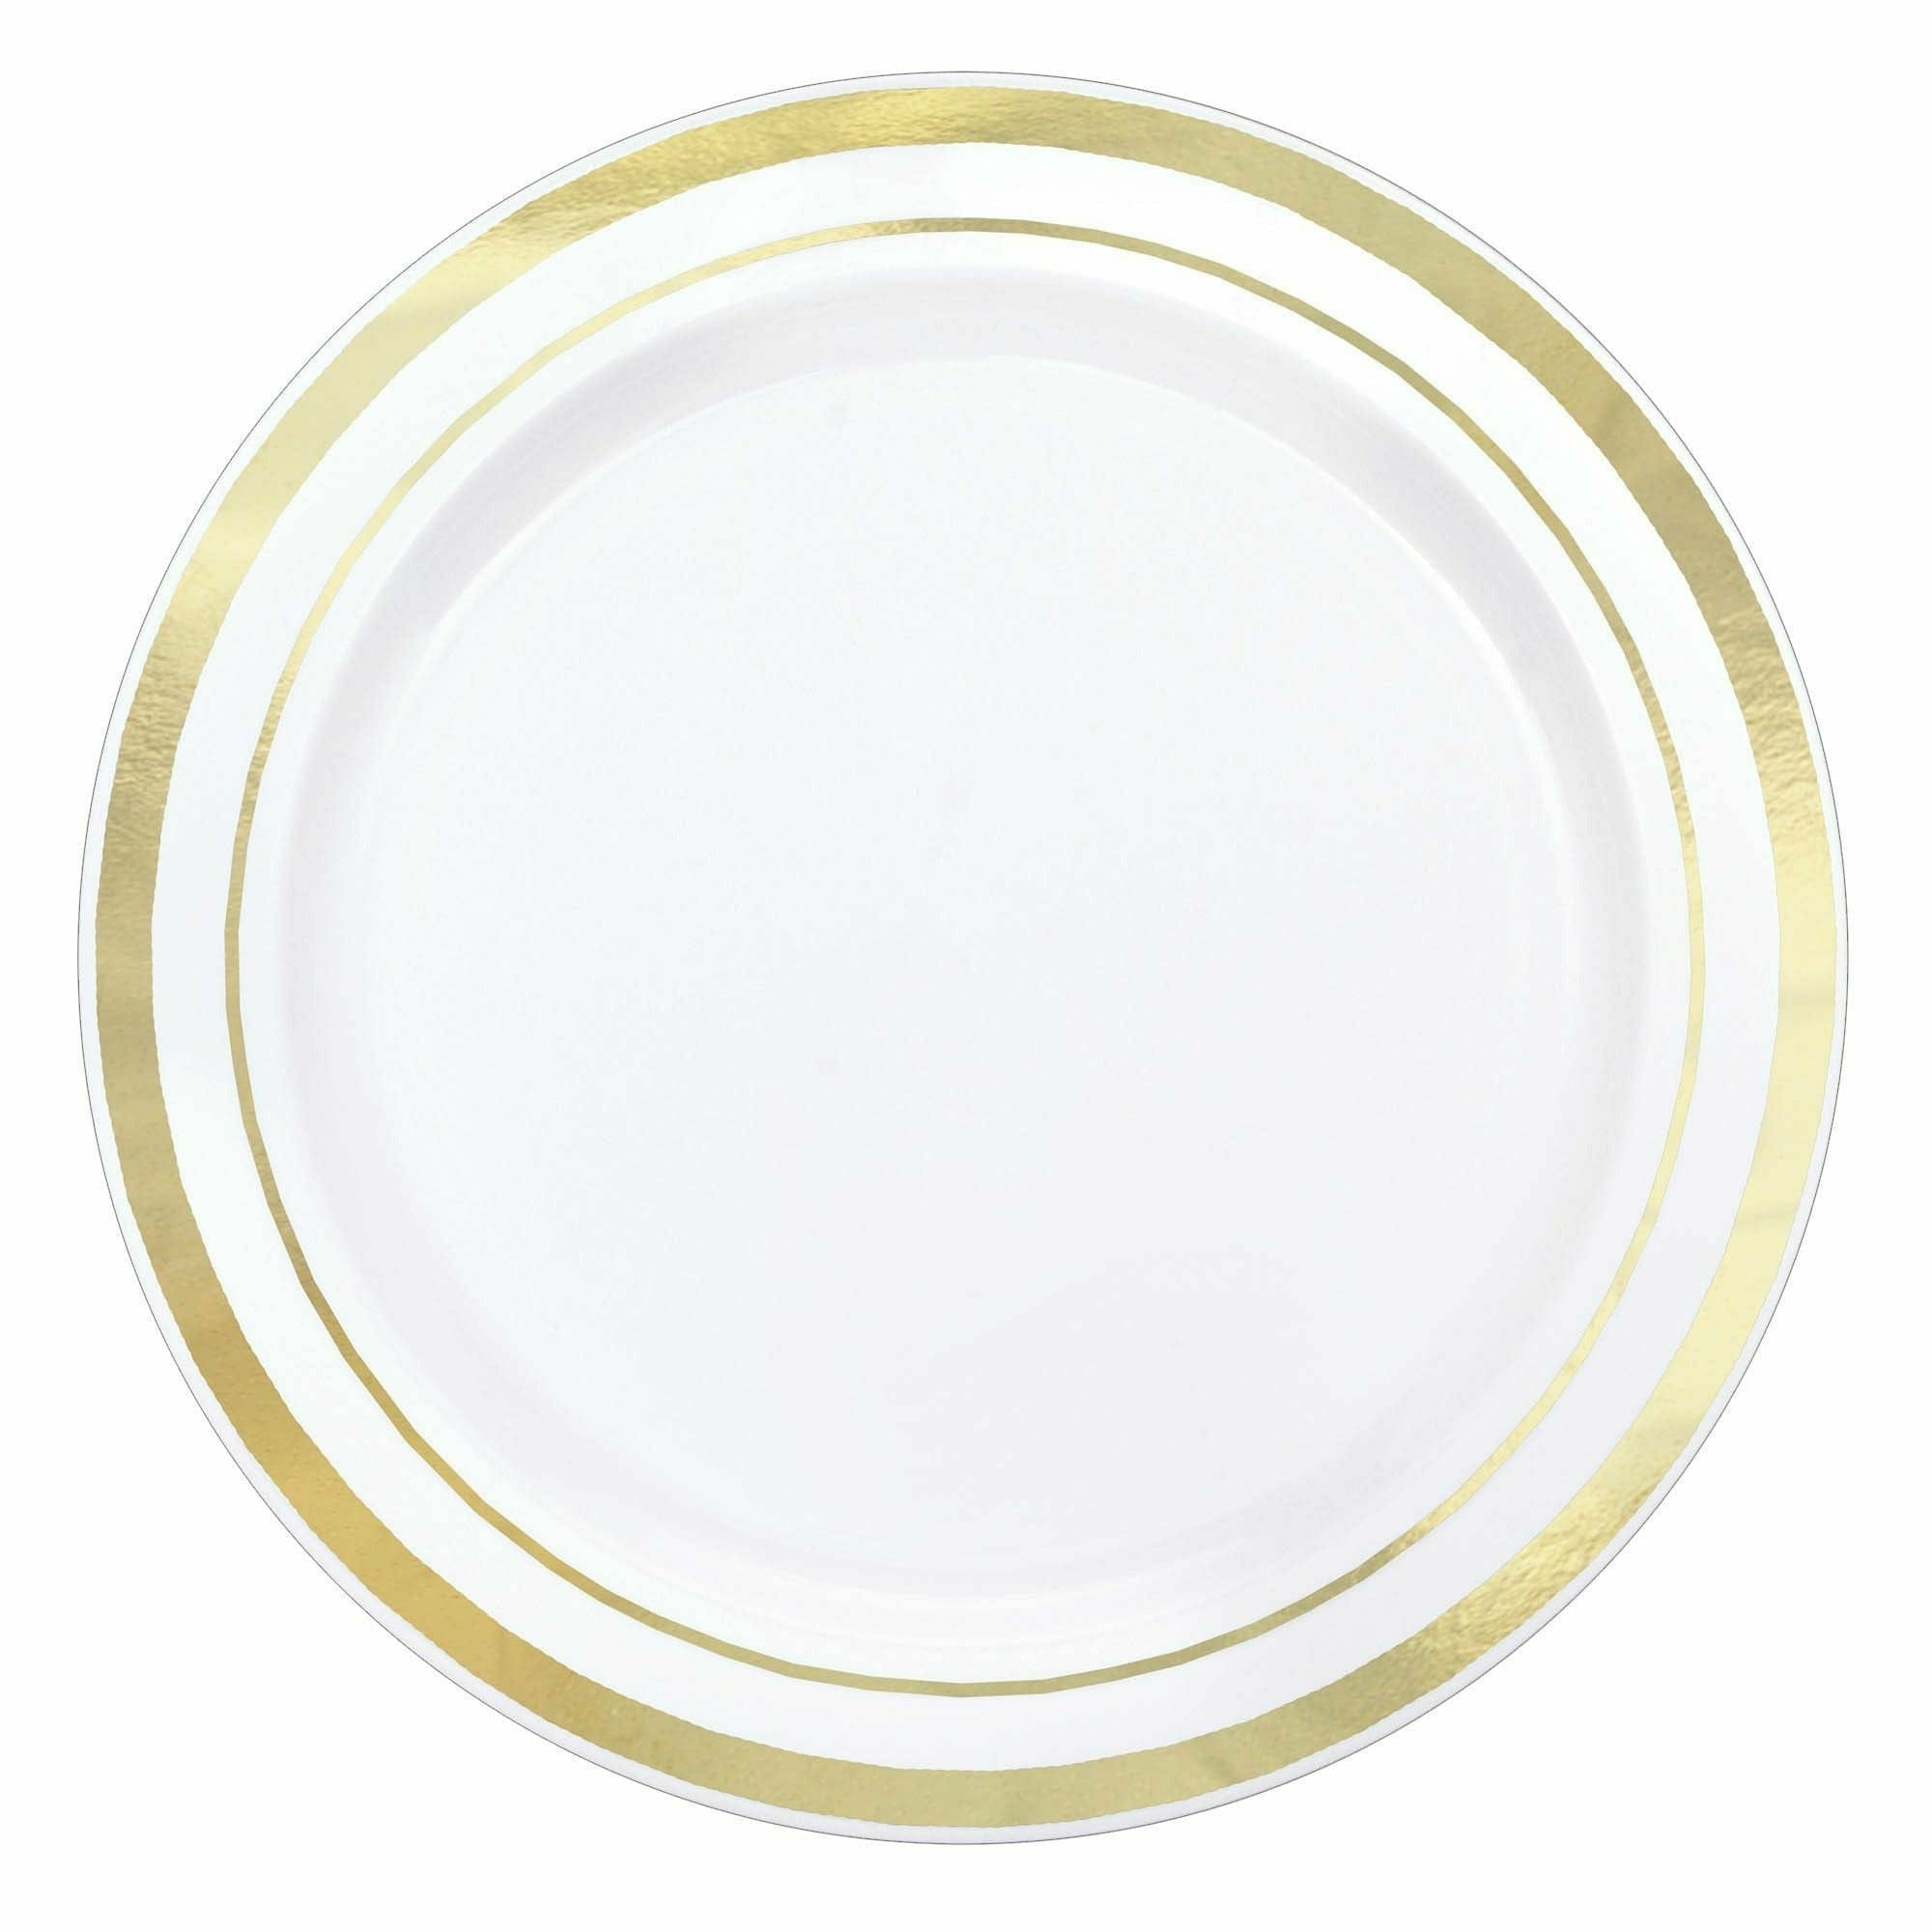 Amscan BASIC White Premium Plastic Round Plates with Gold Trim, 6 1/4"